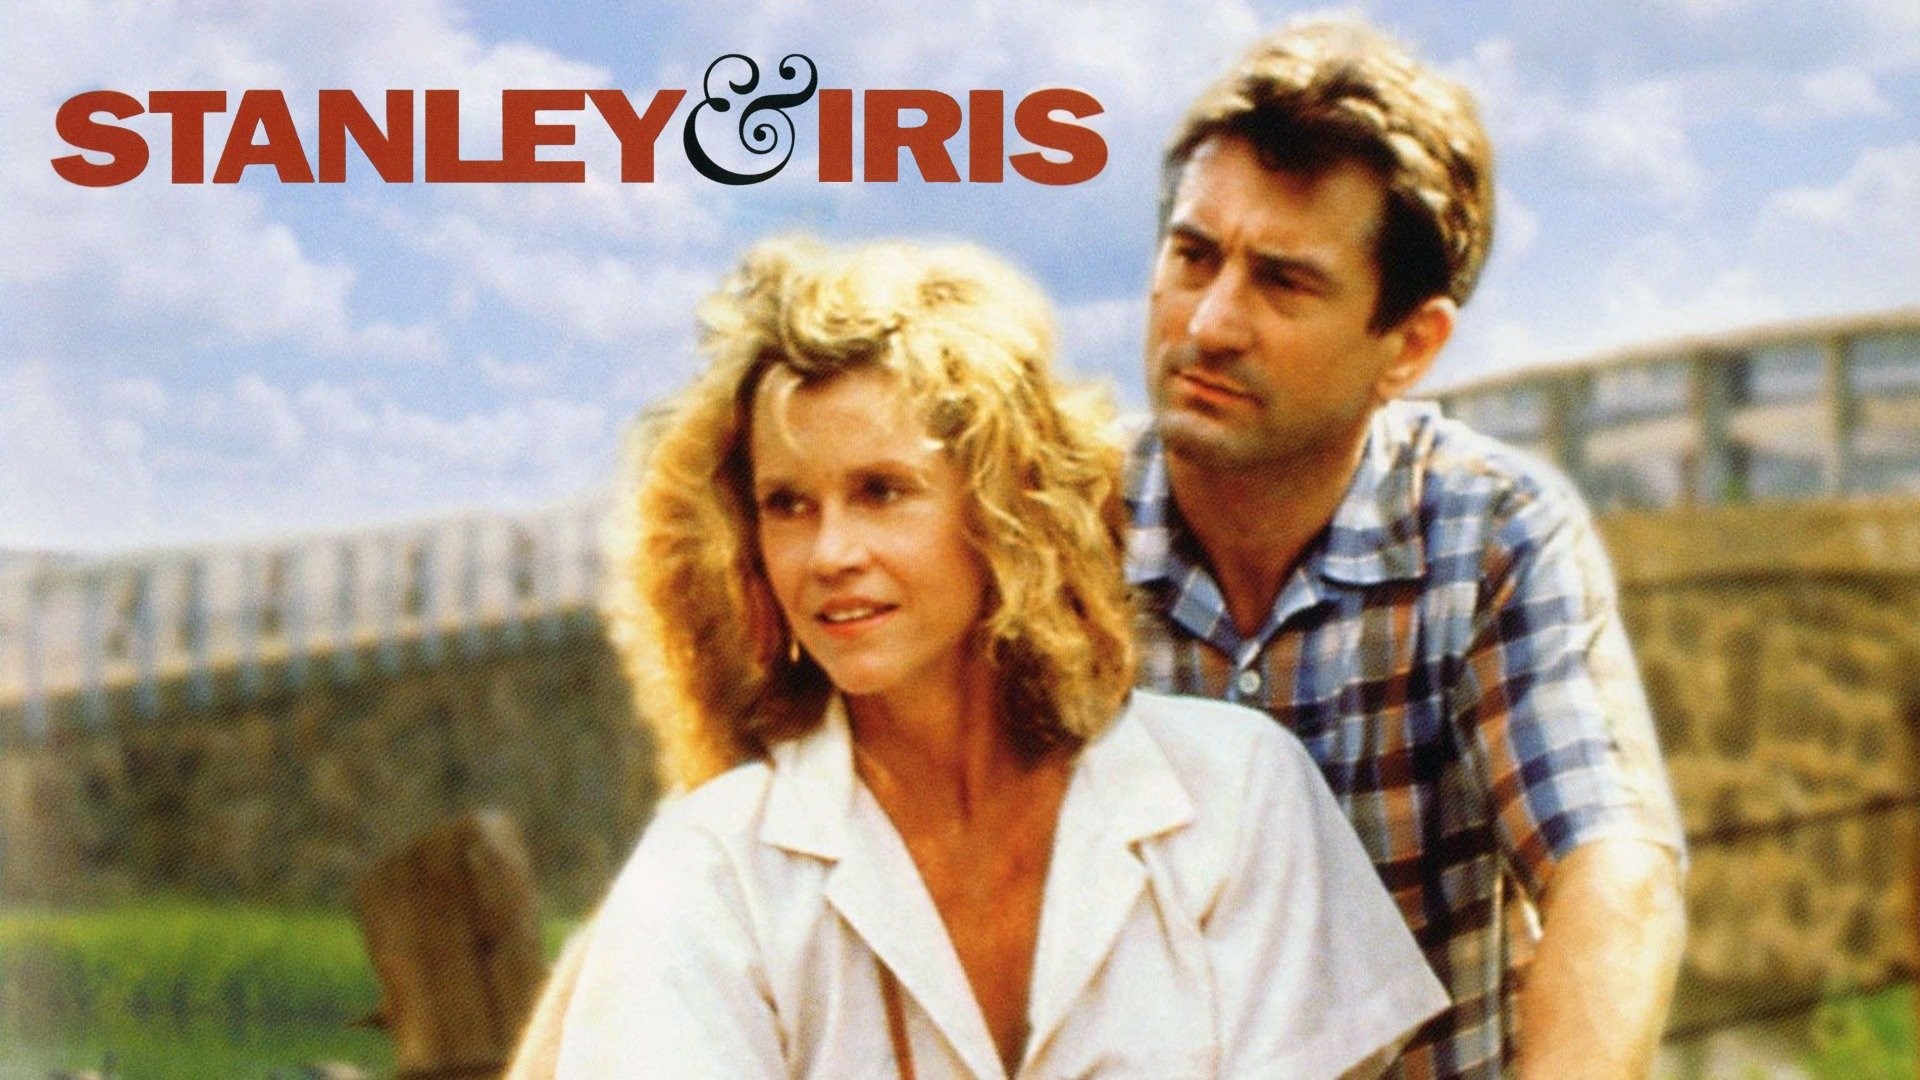 Stanley & Iris (1/11) Movie CLIP - Iris Meets Stanley (1990) HD